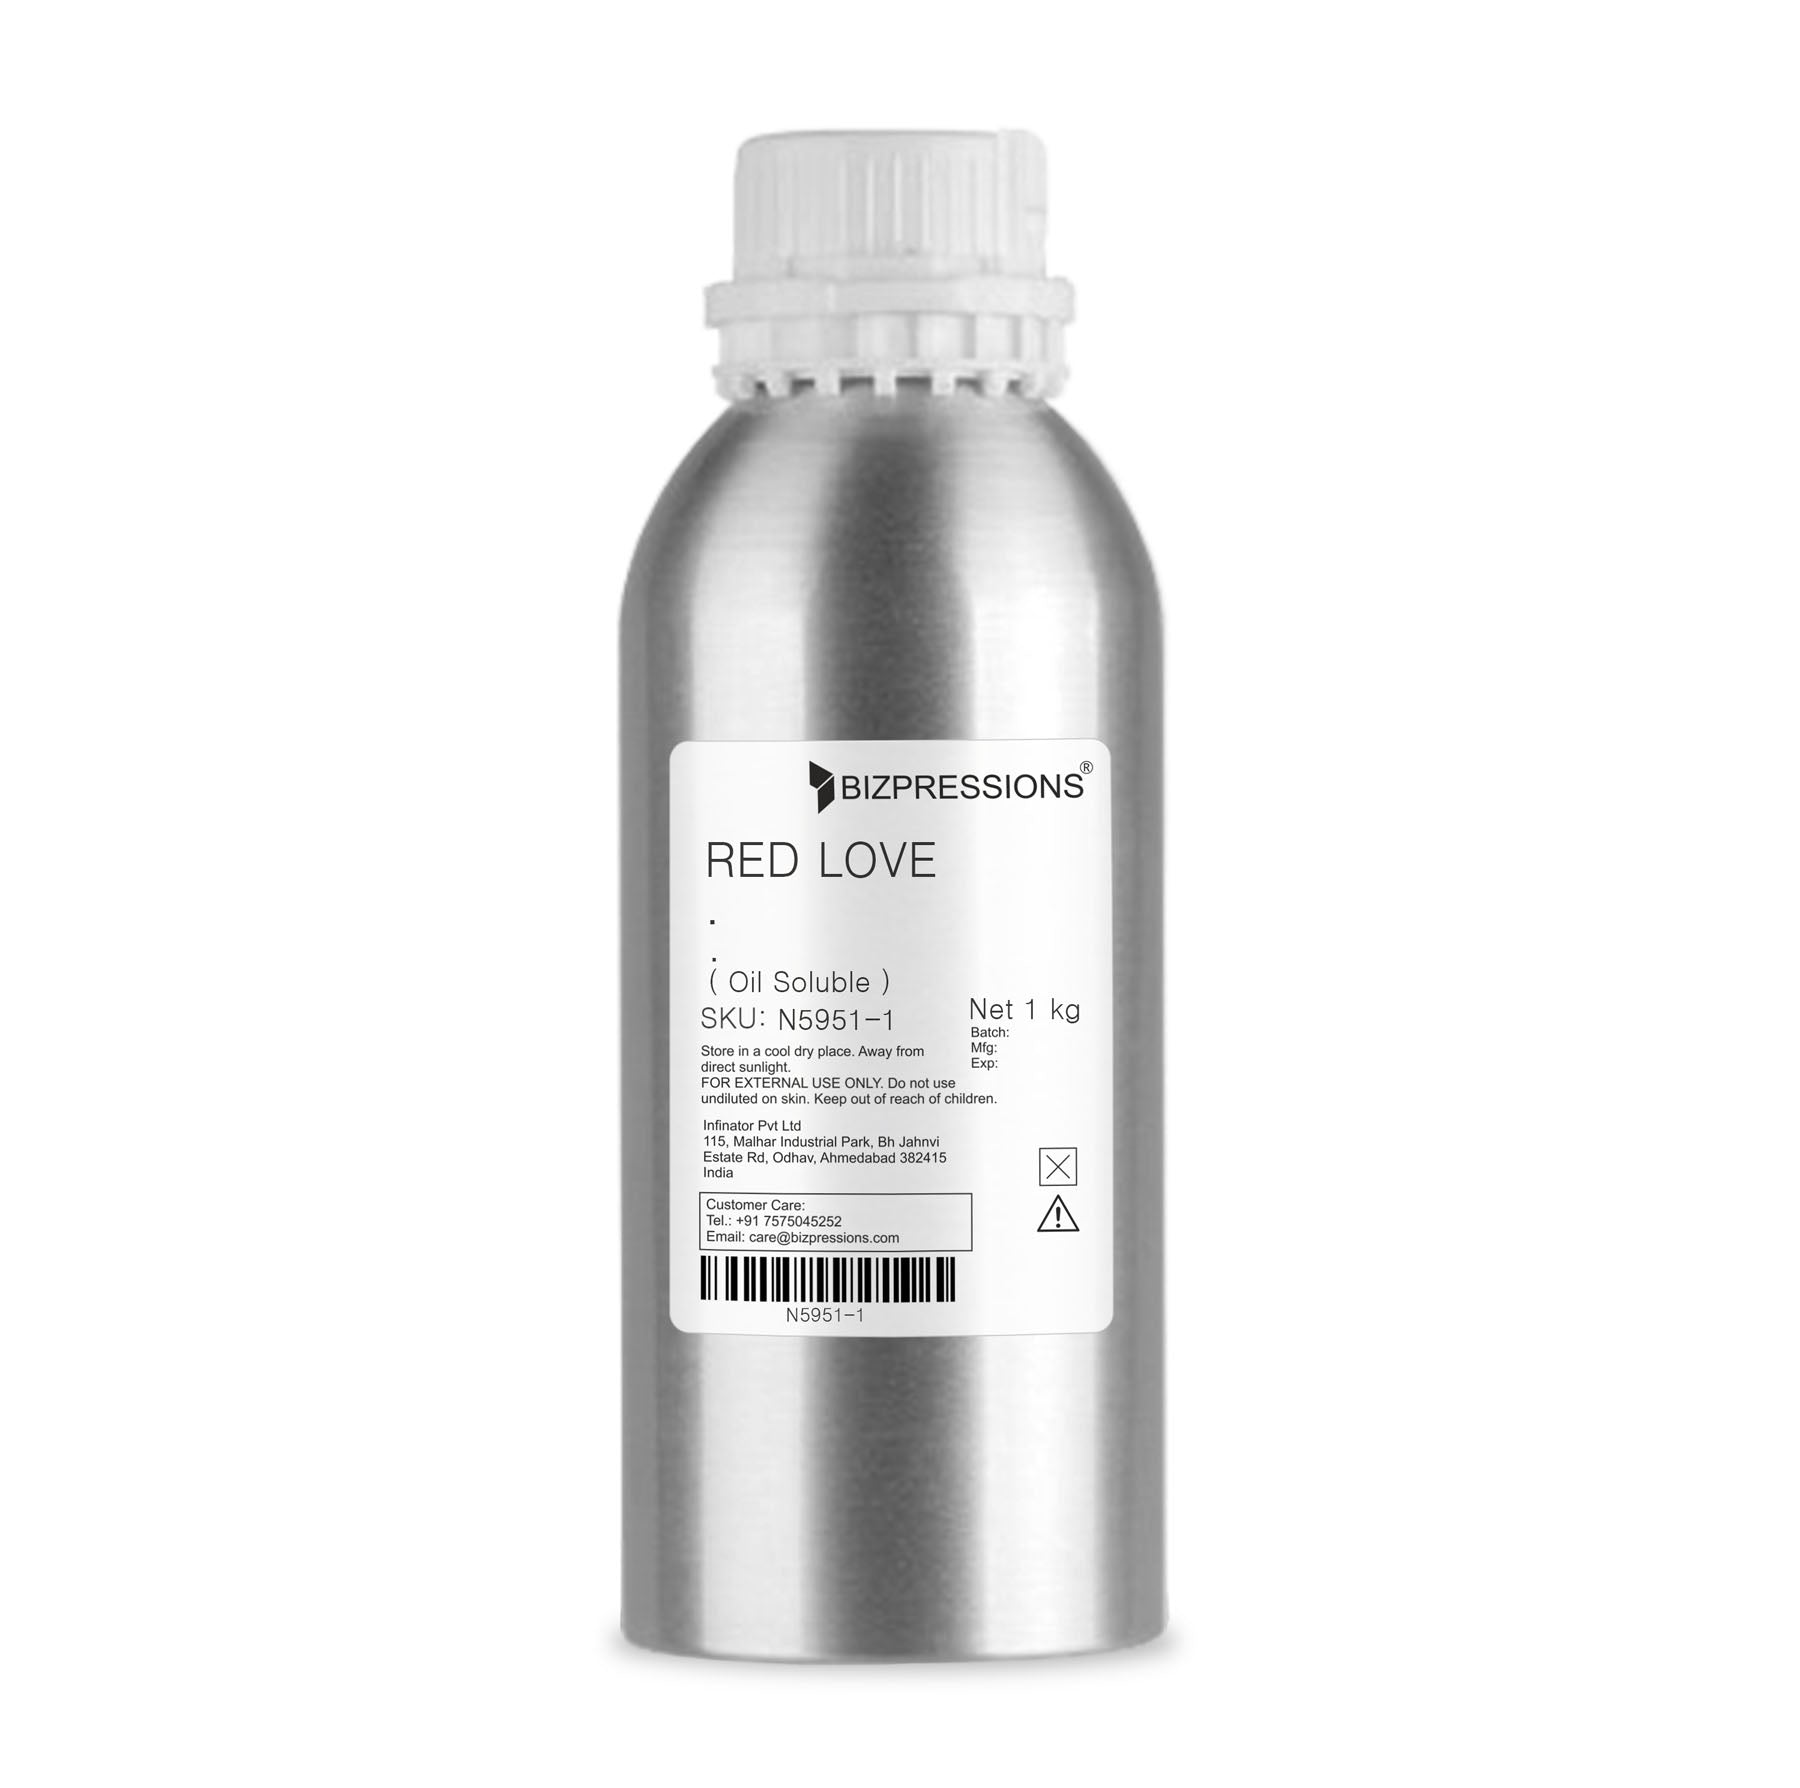 RED LOVE - Fragrance ( Oil Soluble ) - 1 kg